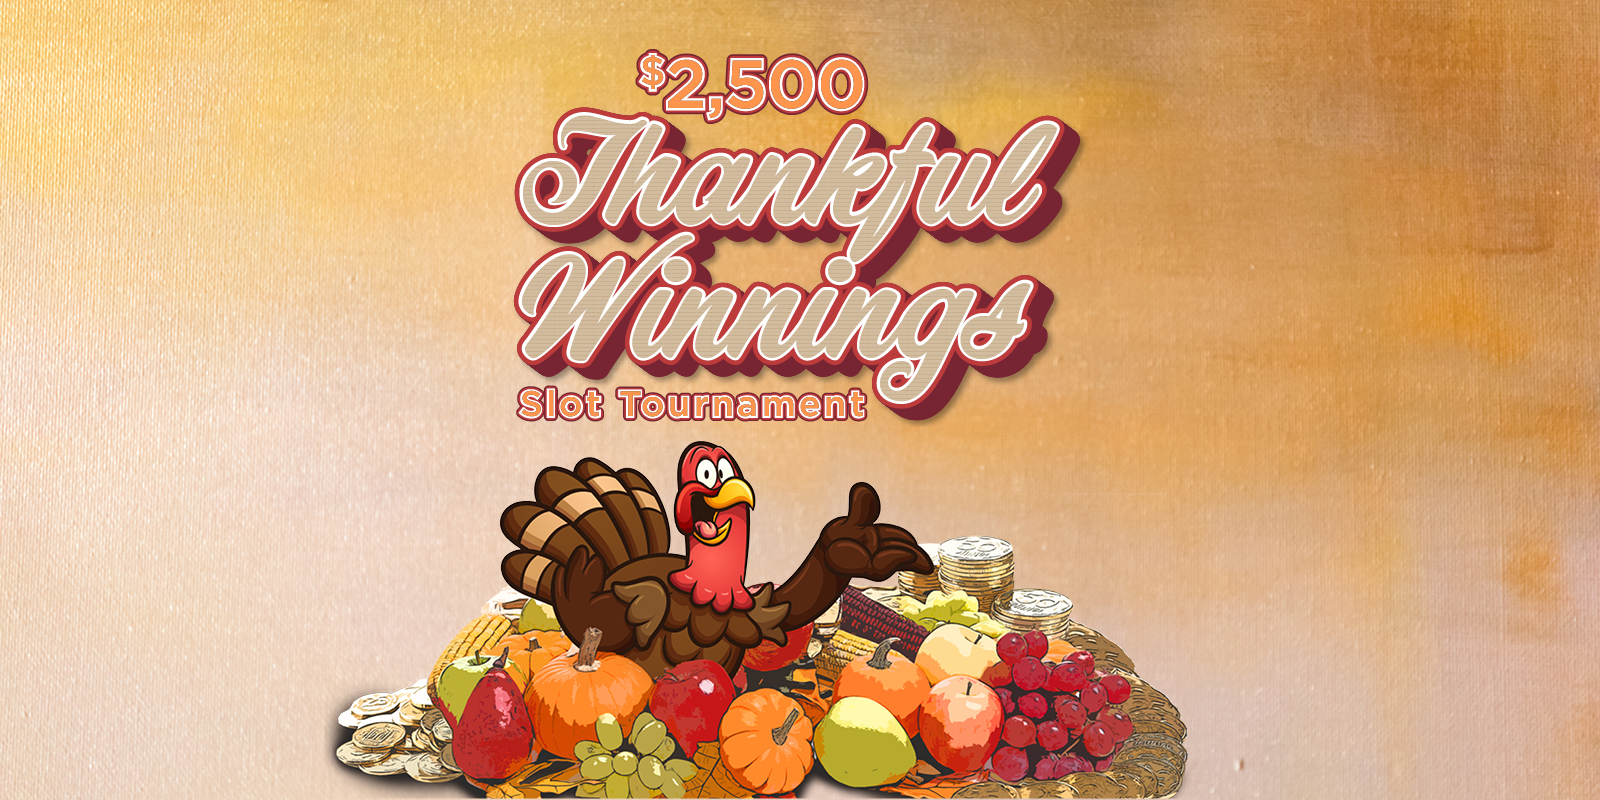 $2500 thankful winnings slot tournament showing a turkey and produce